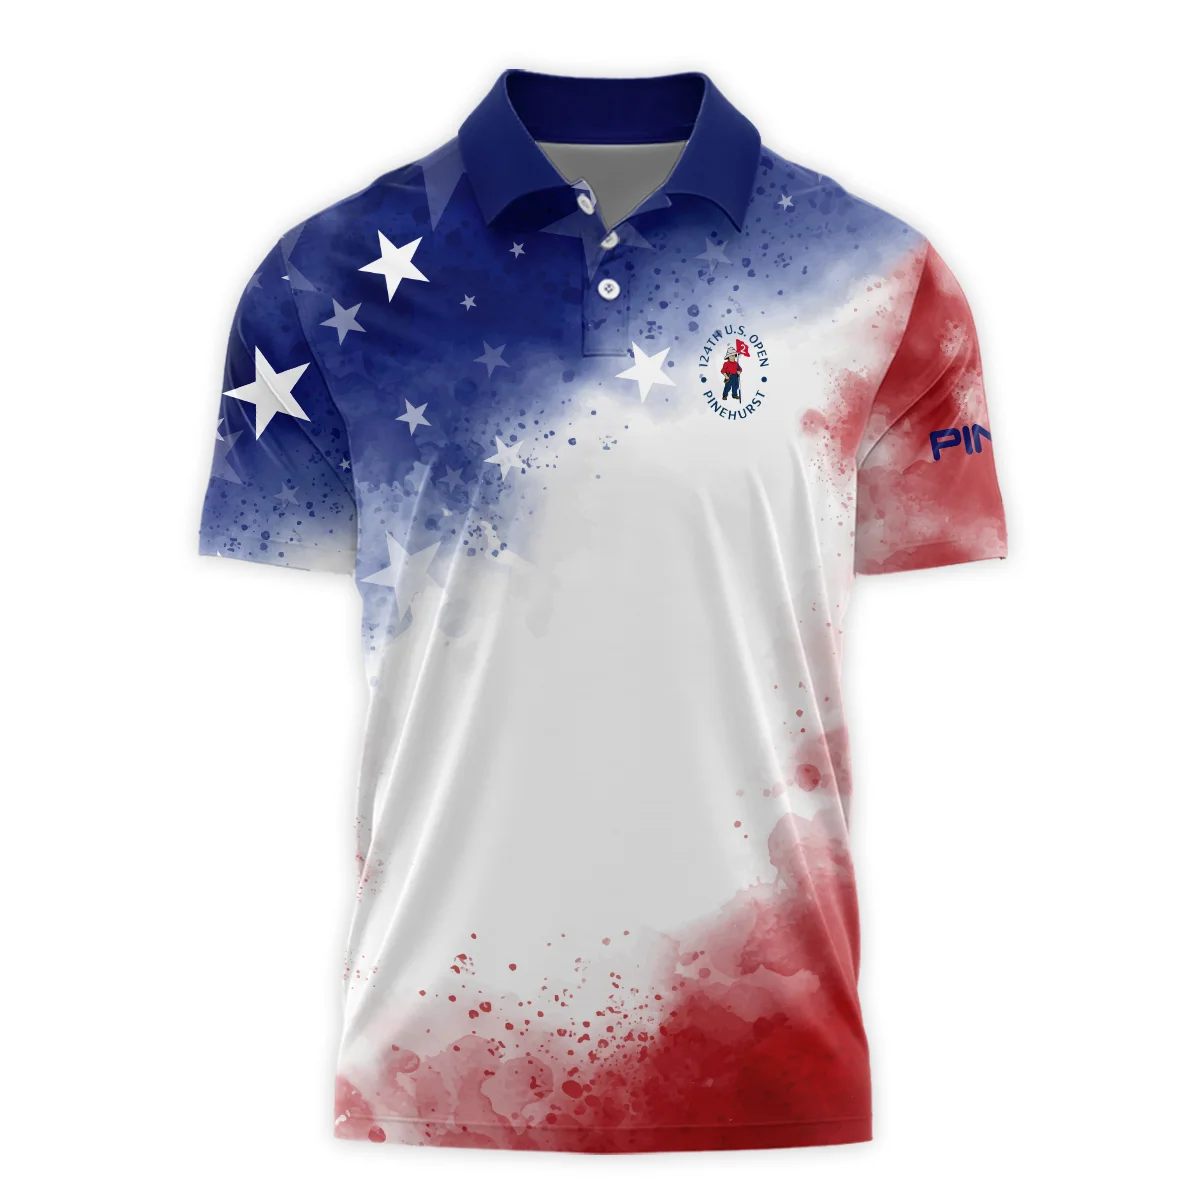 124th U.S. Open Pinehurst Ping Blue Red Watercolor Star White Backgound Polo Shirt Mandarin Collar Polo Shirt